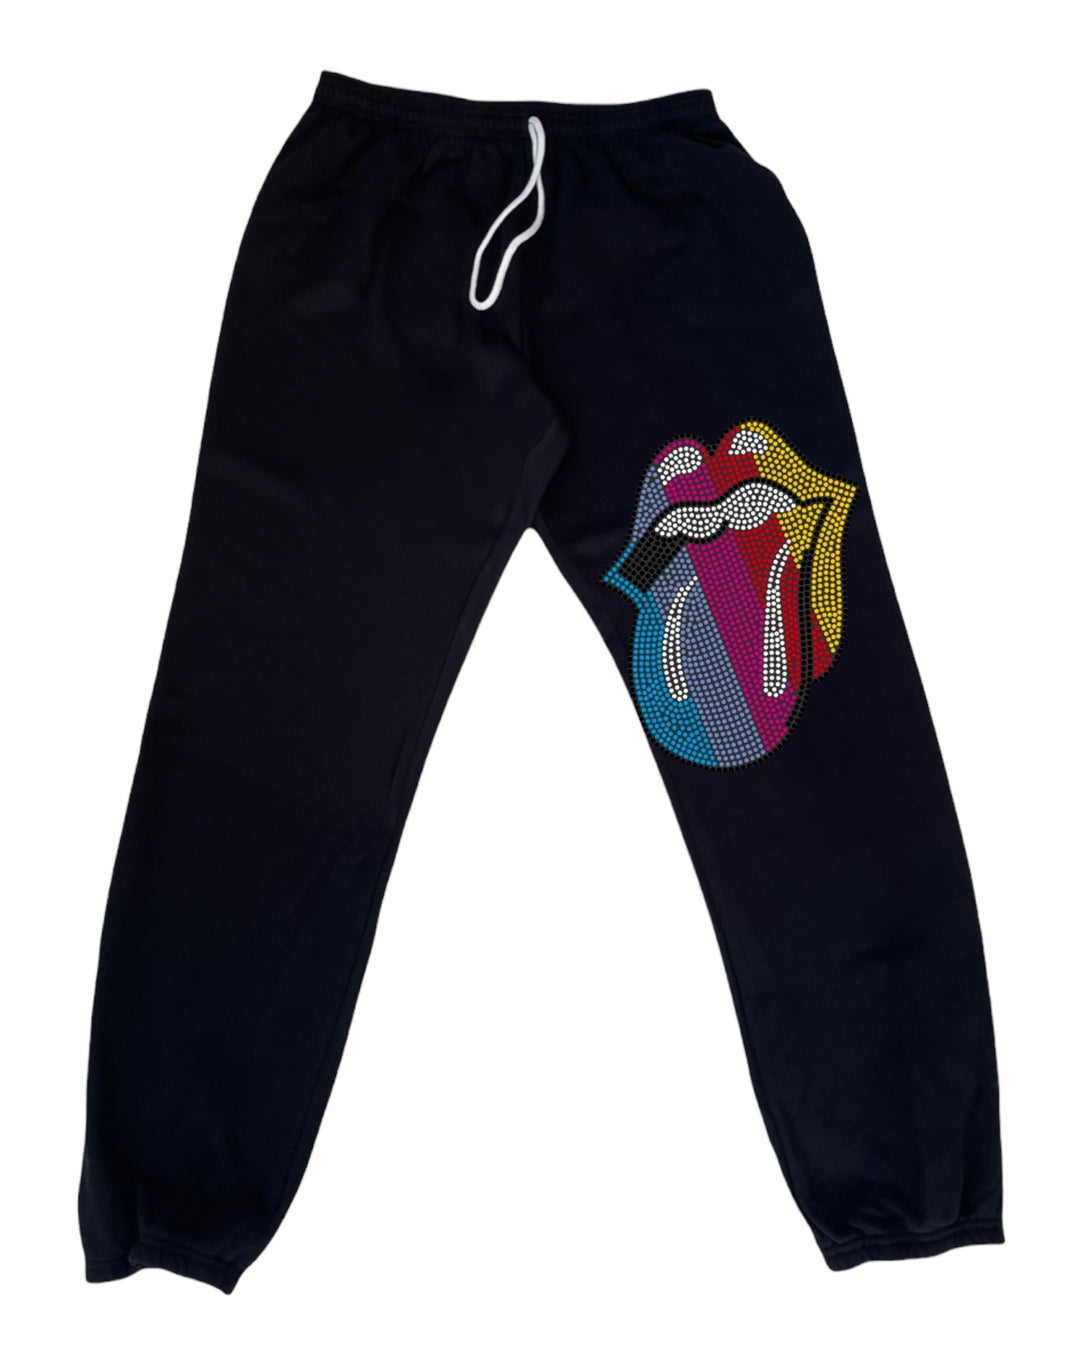 Alternate Rainbow Tongue Sweatpants